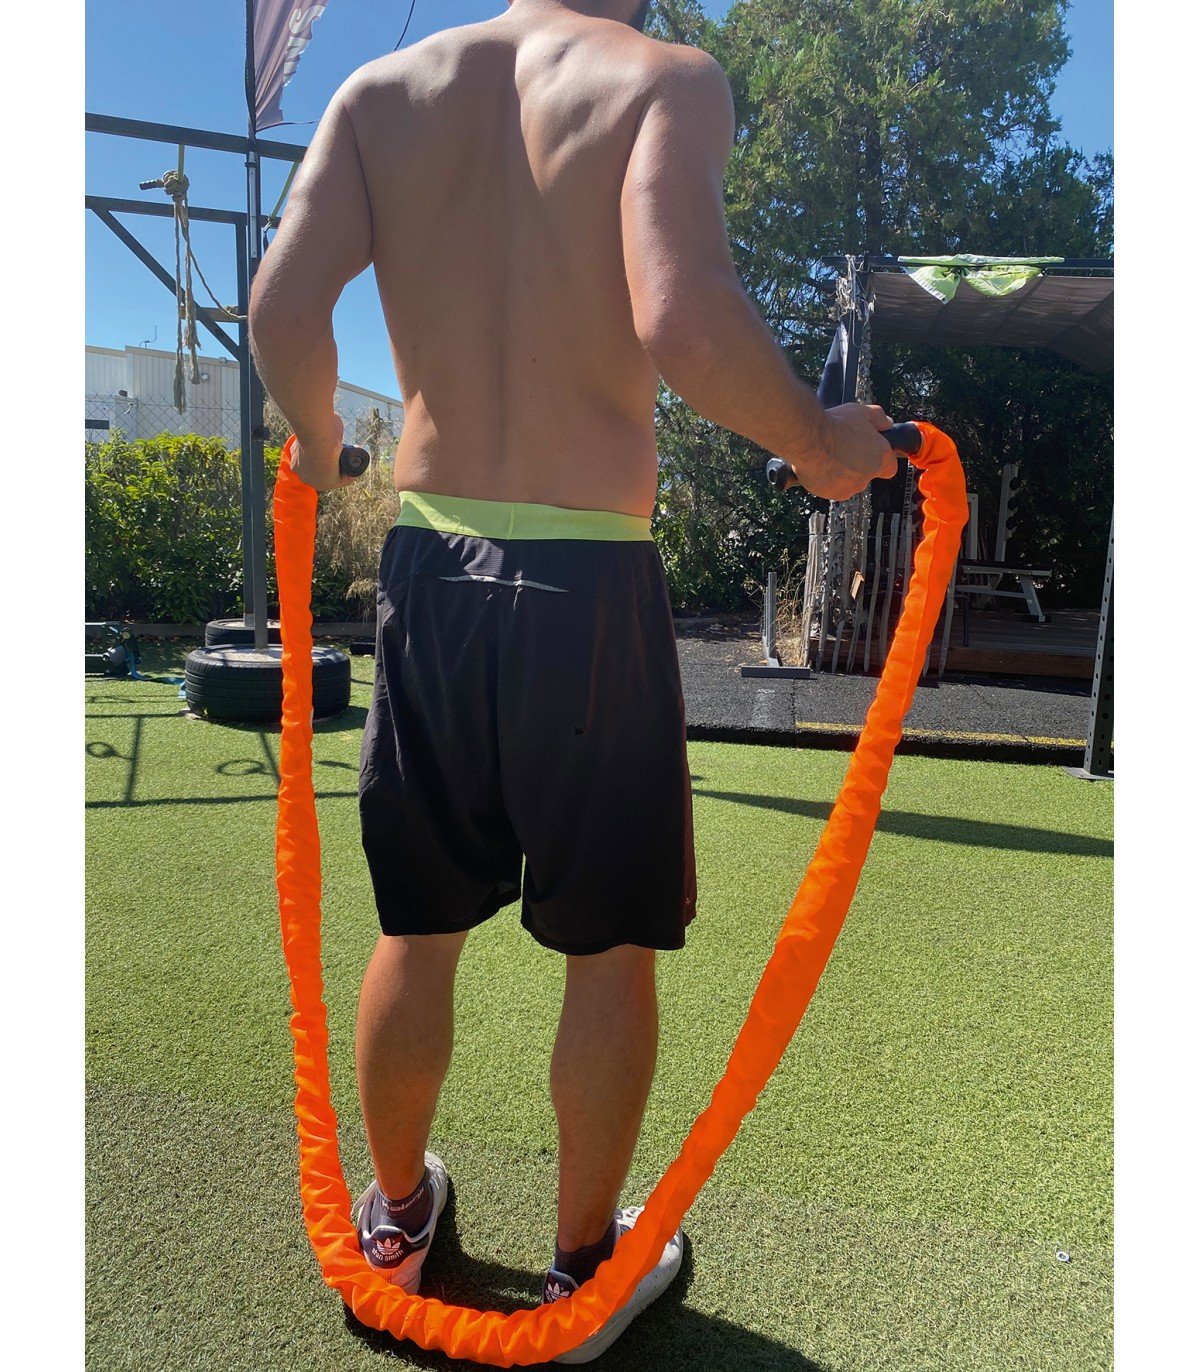 Cuerda para saltar pesada, 3 metros de longitud. Color naranja